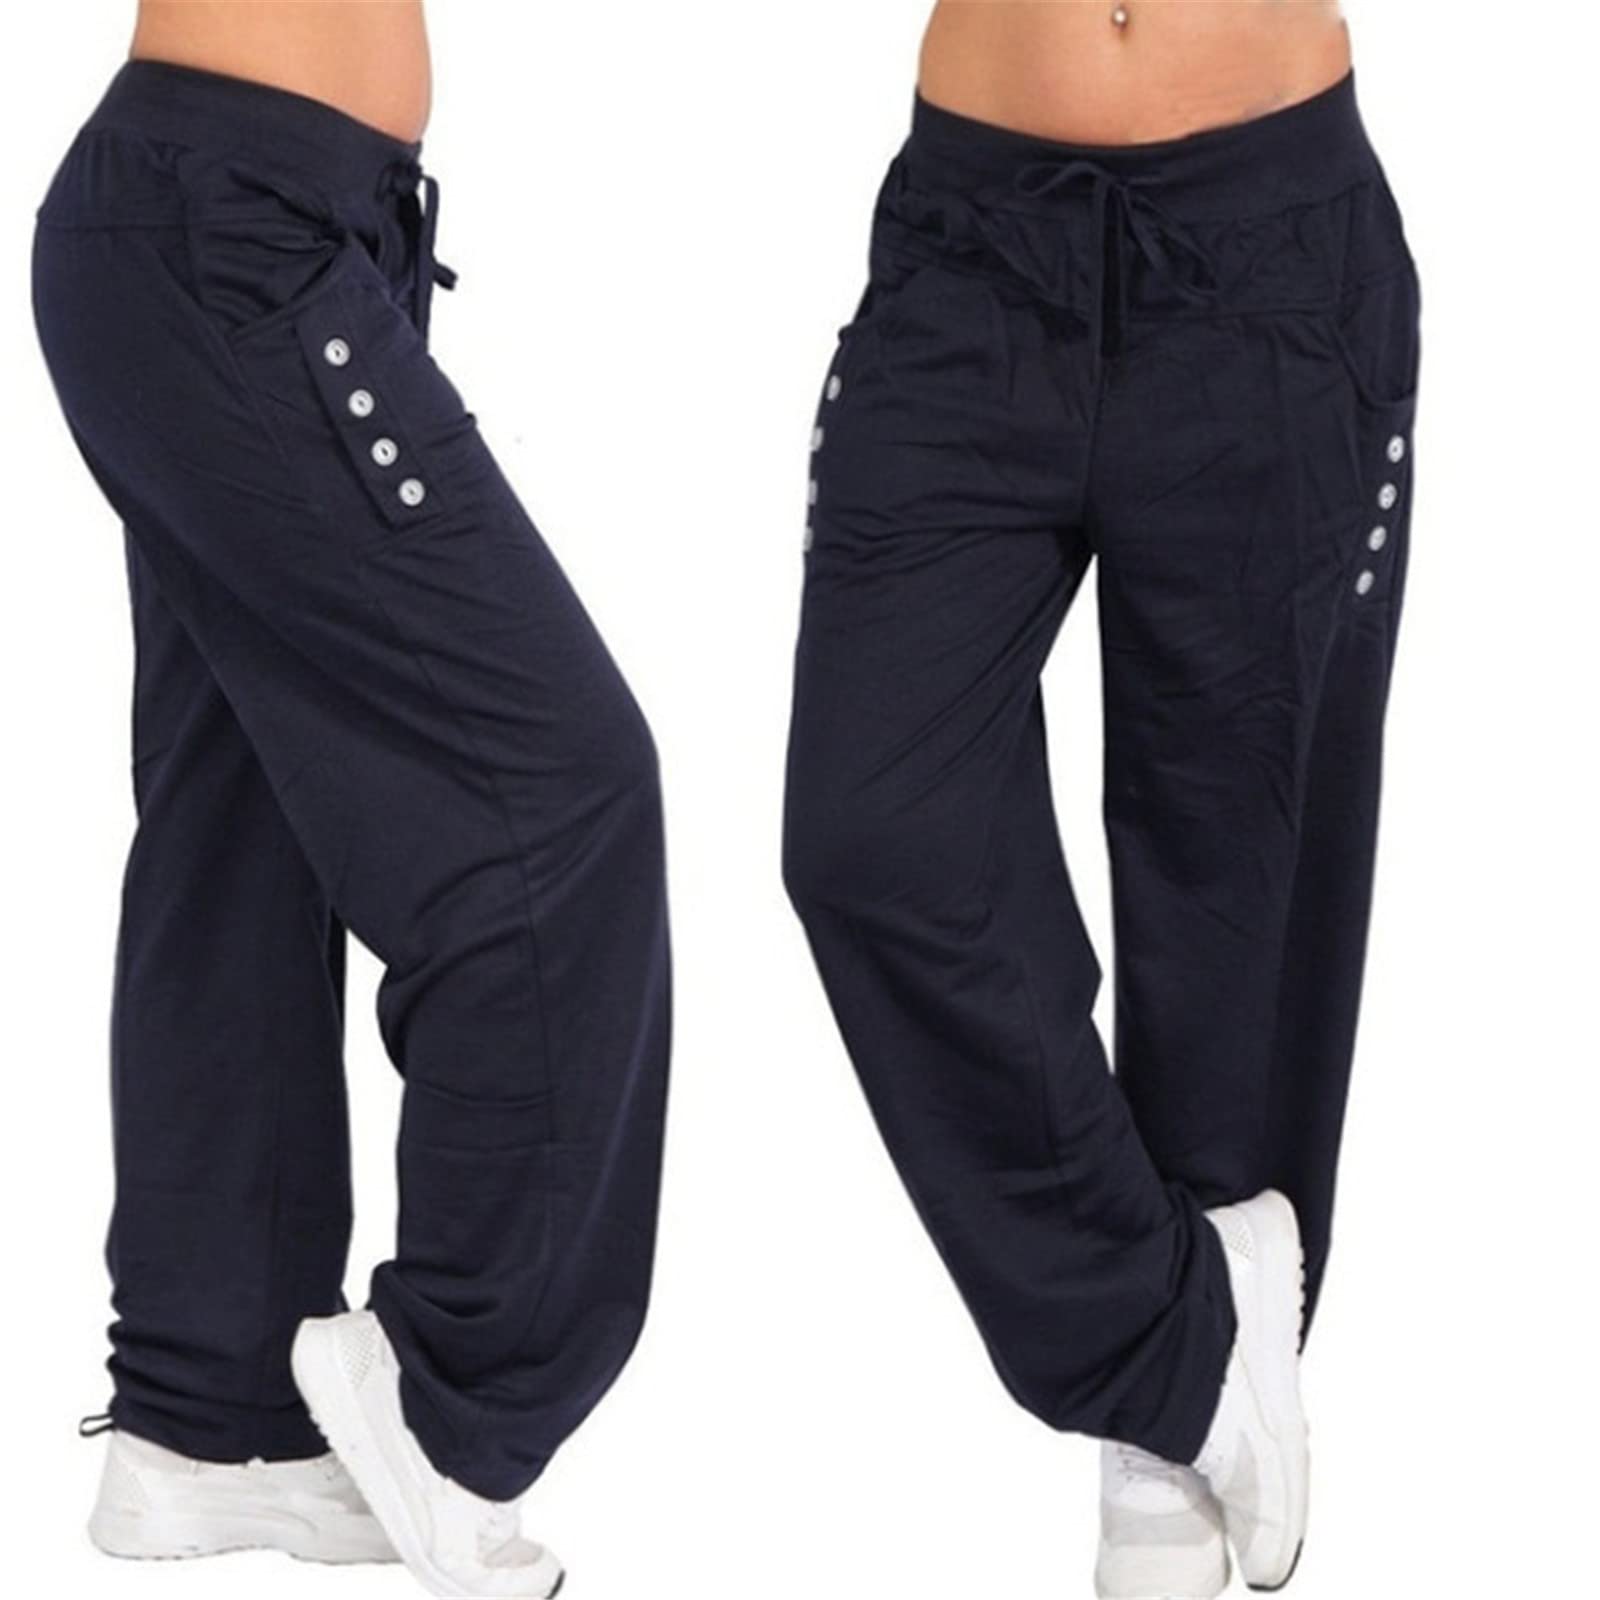 Women's Sloth Pajama Pants- Super Soft! XS | eBay